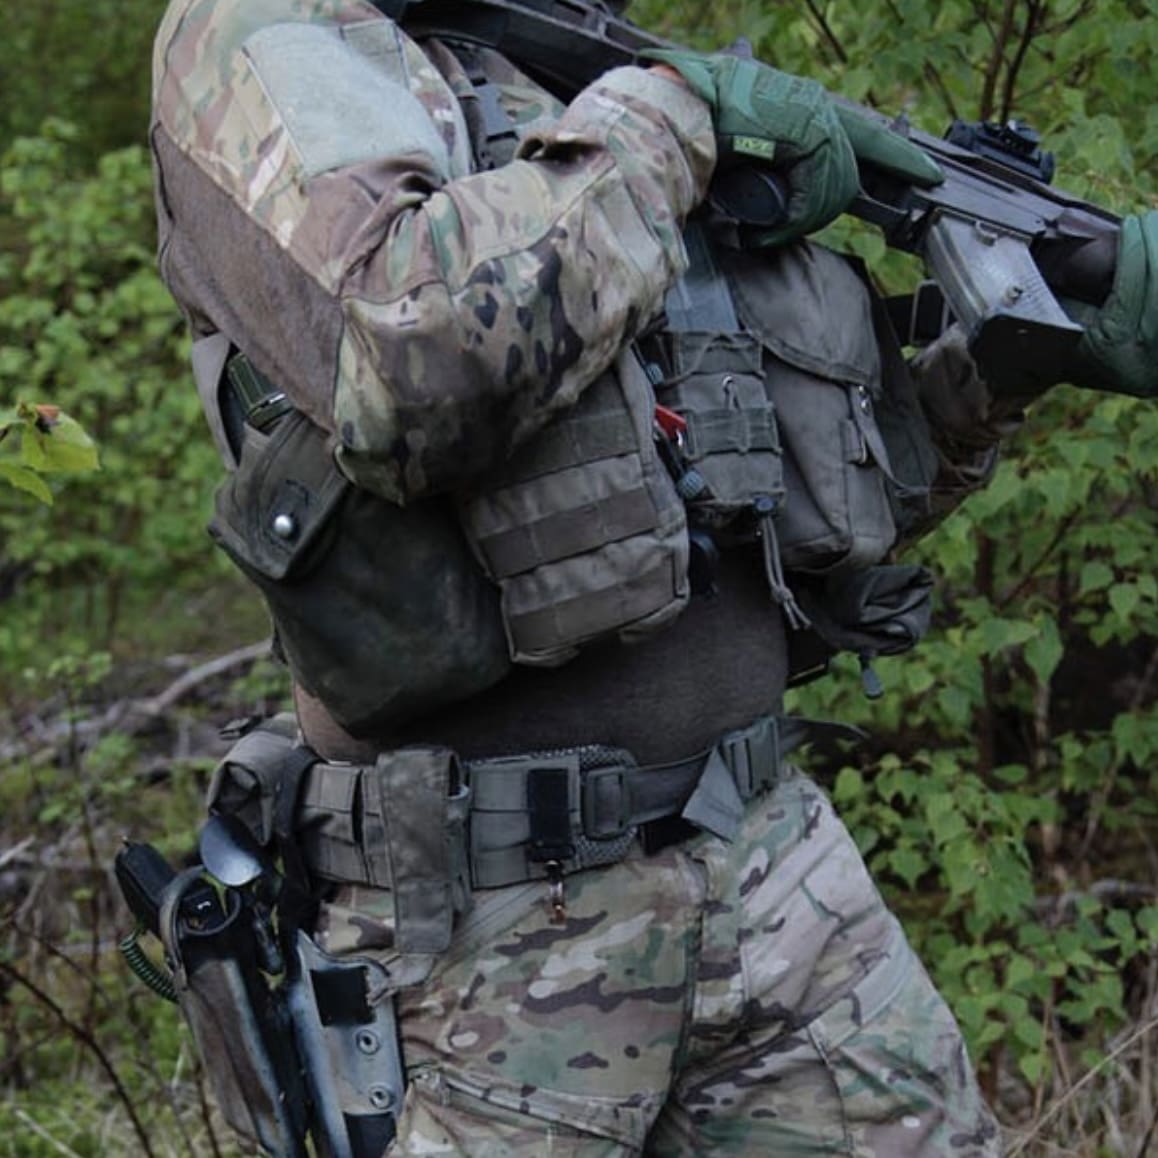 Sneak Peek – Snigel Designs Light Combat Belt 1.0 - Soldier Systems Daily